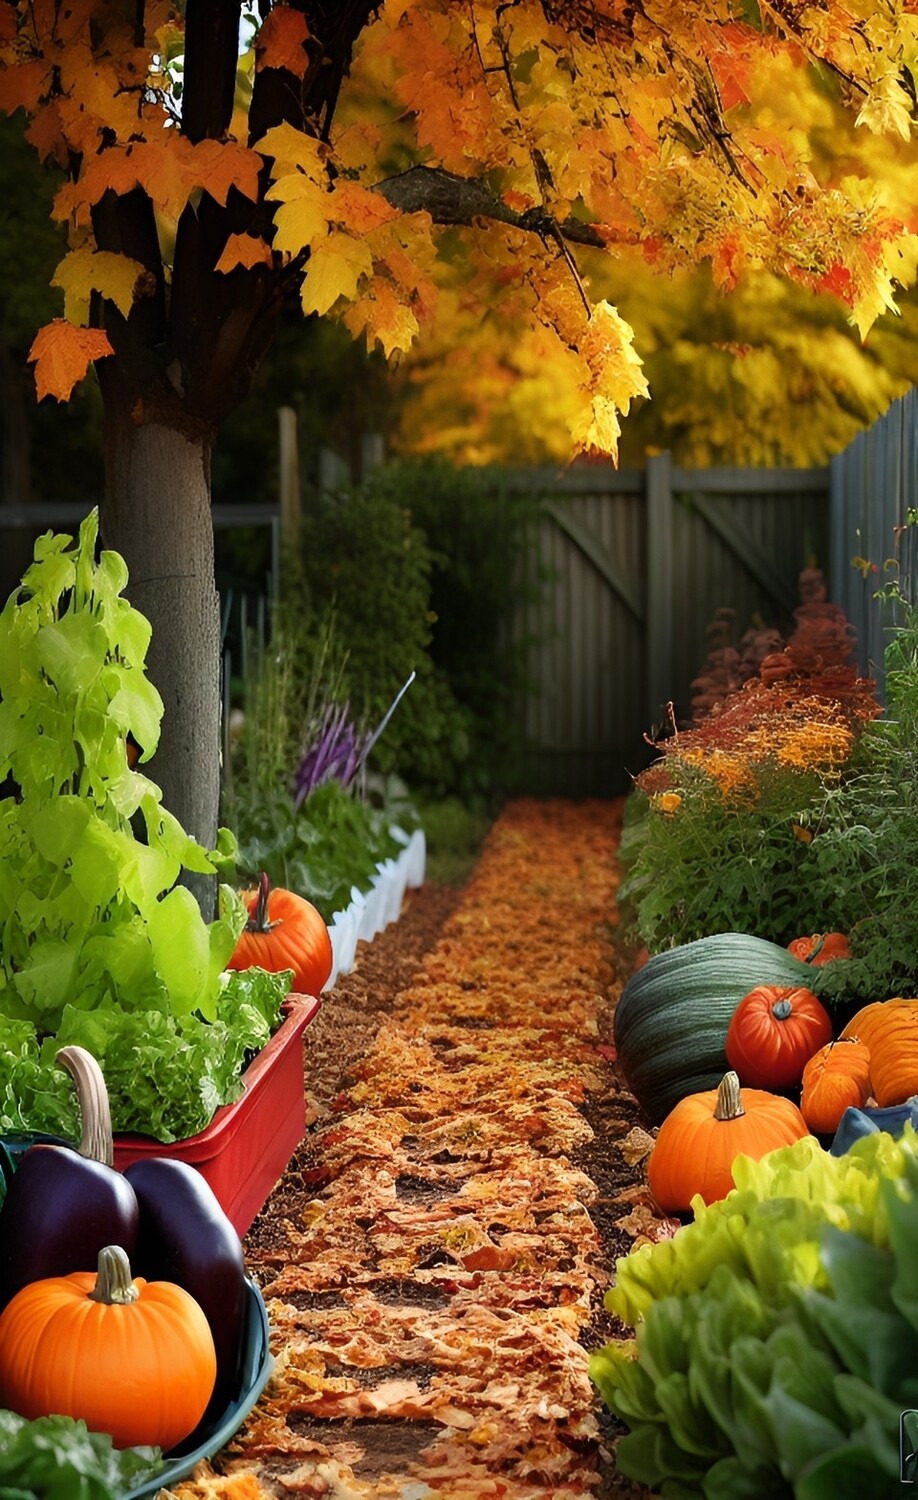 Garden Chores by Month: November